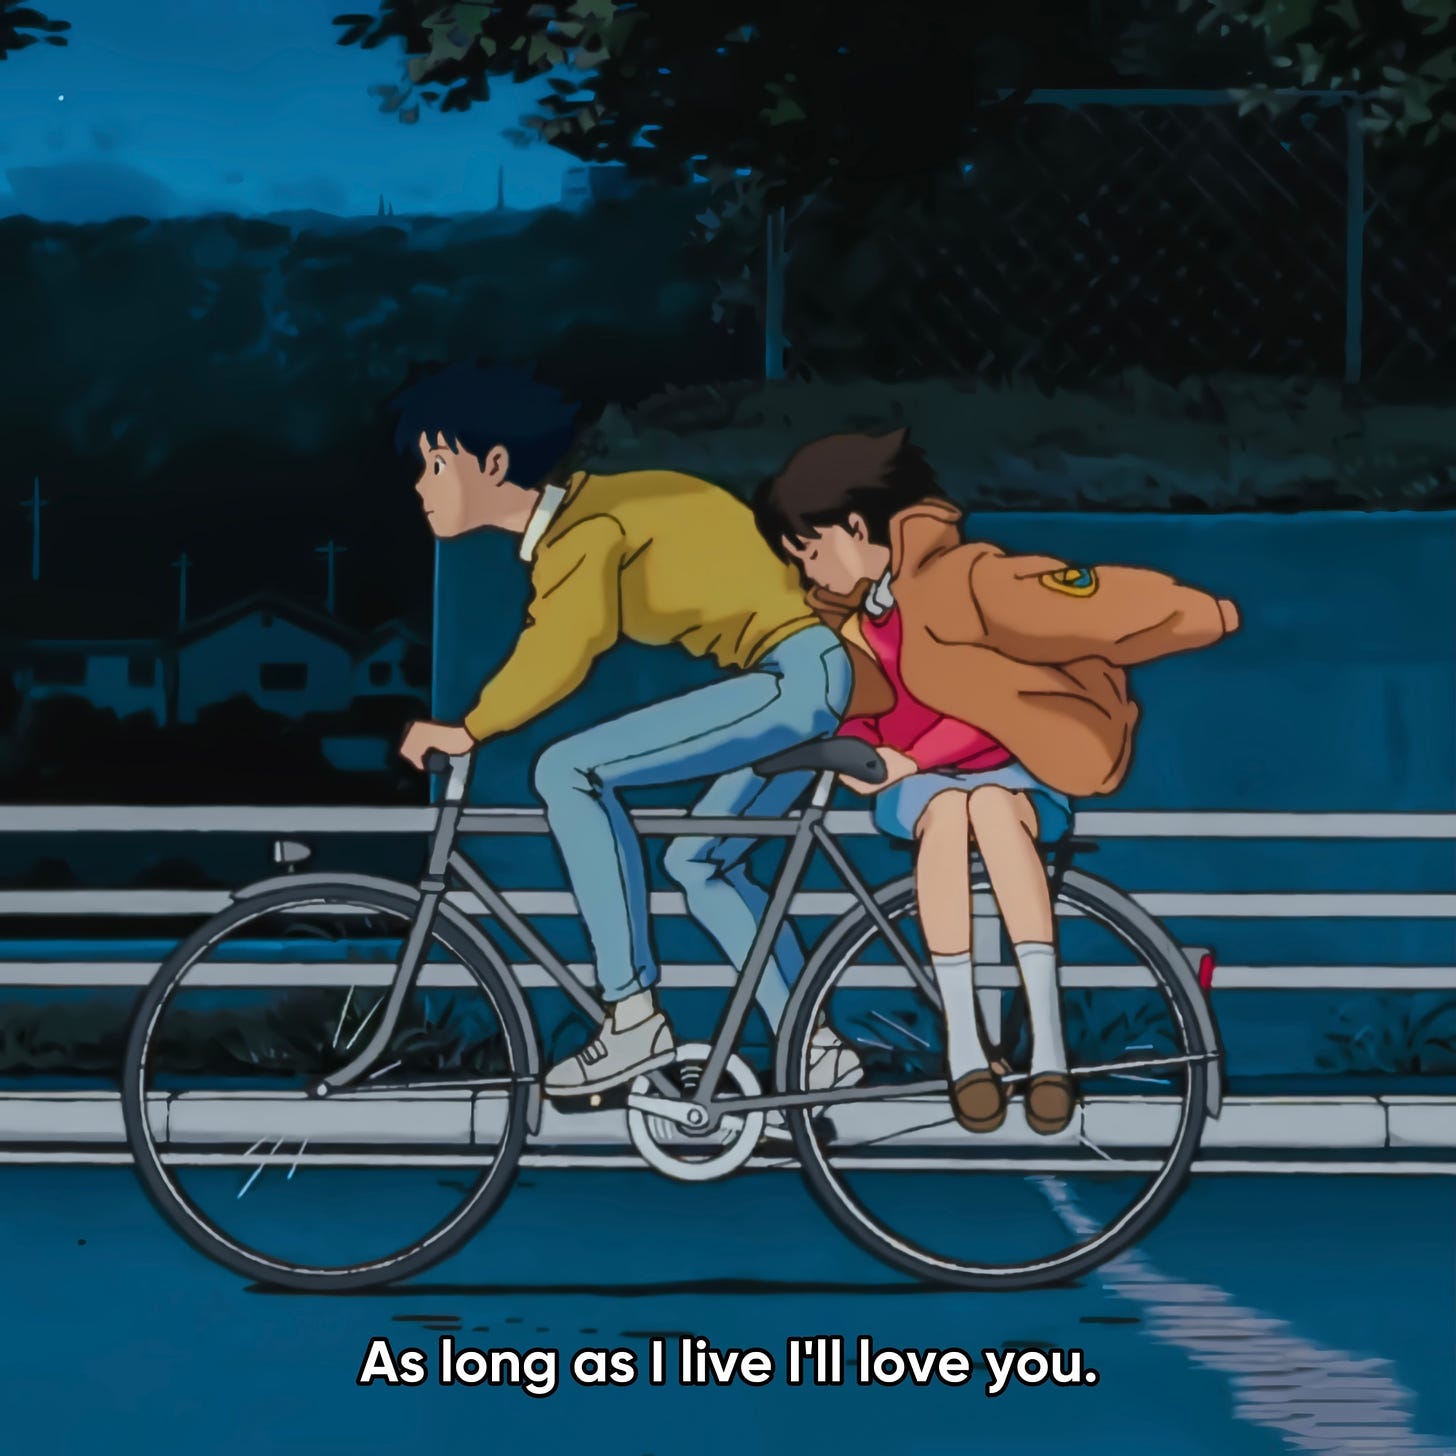 Studio Ghibli on Twitter: "Anime : Whisper of the Heart  https://t.co/jc1u9fbrpu" / X